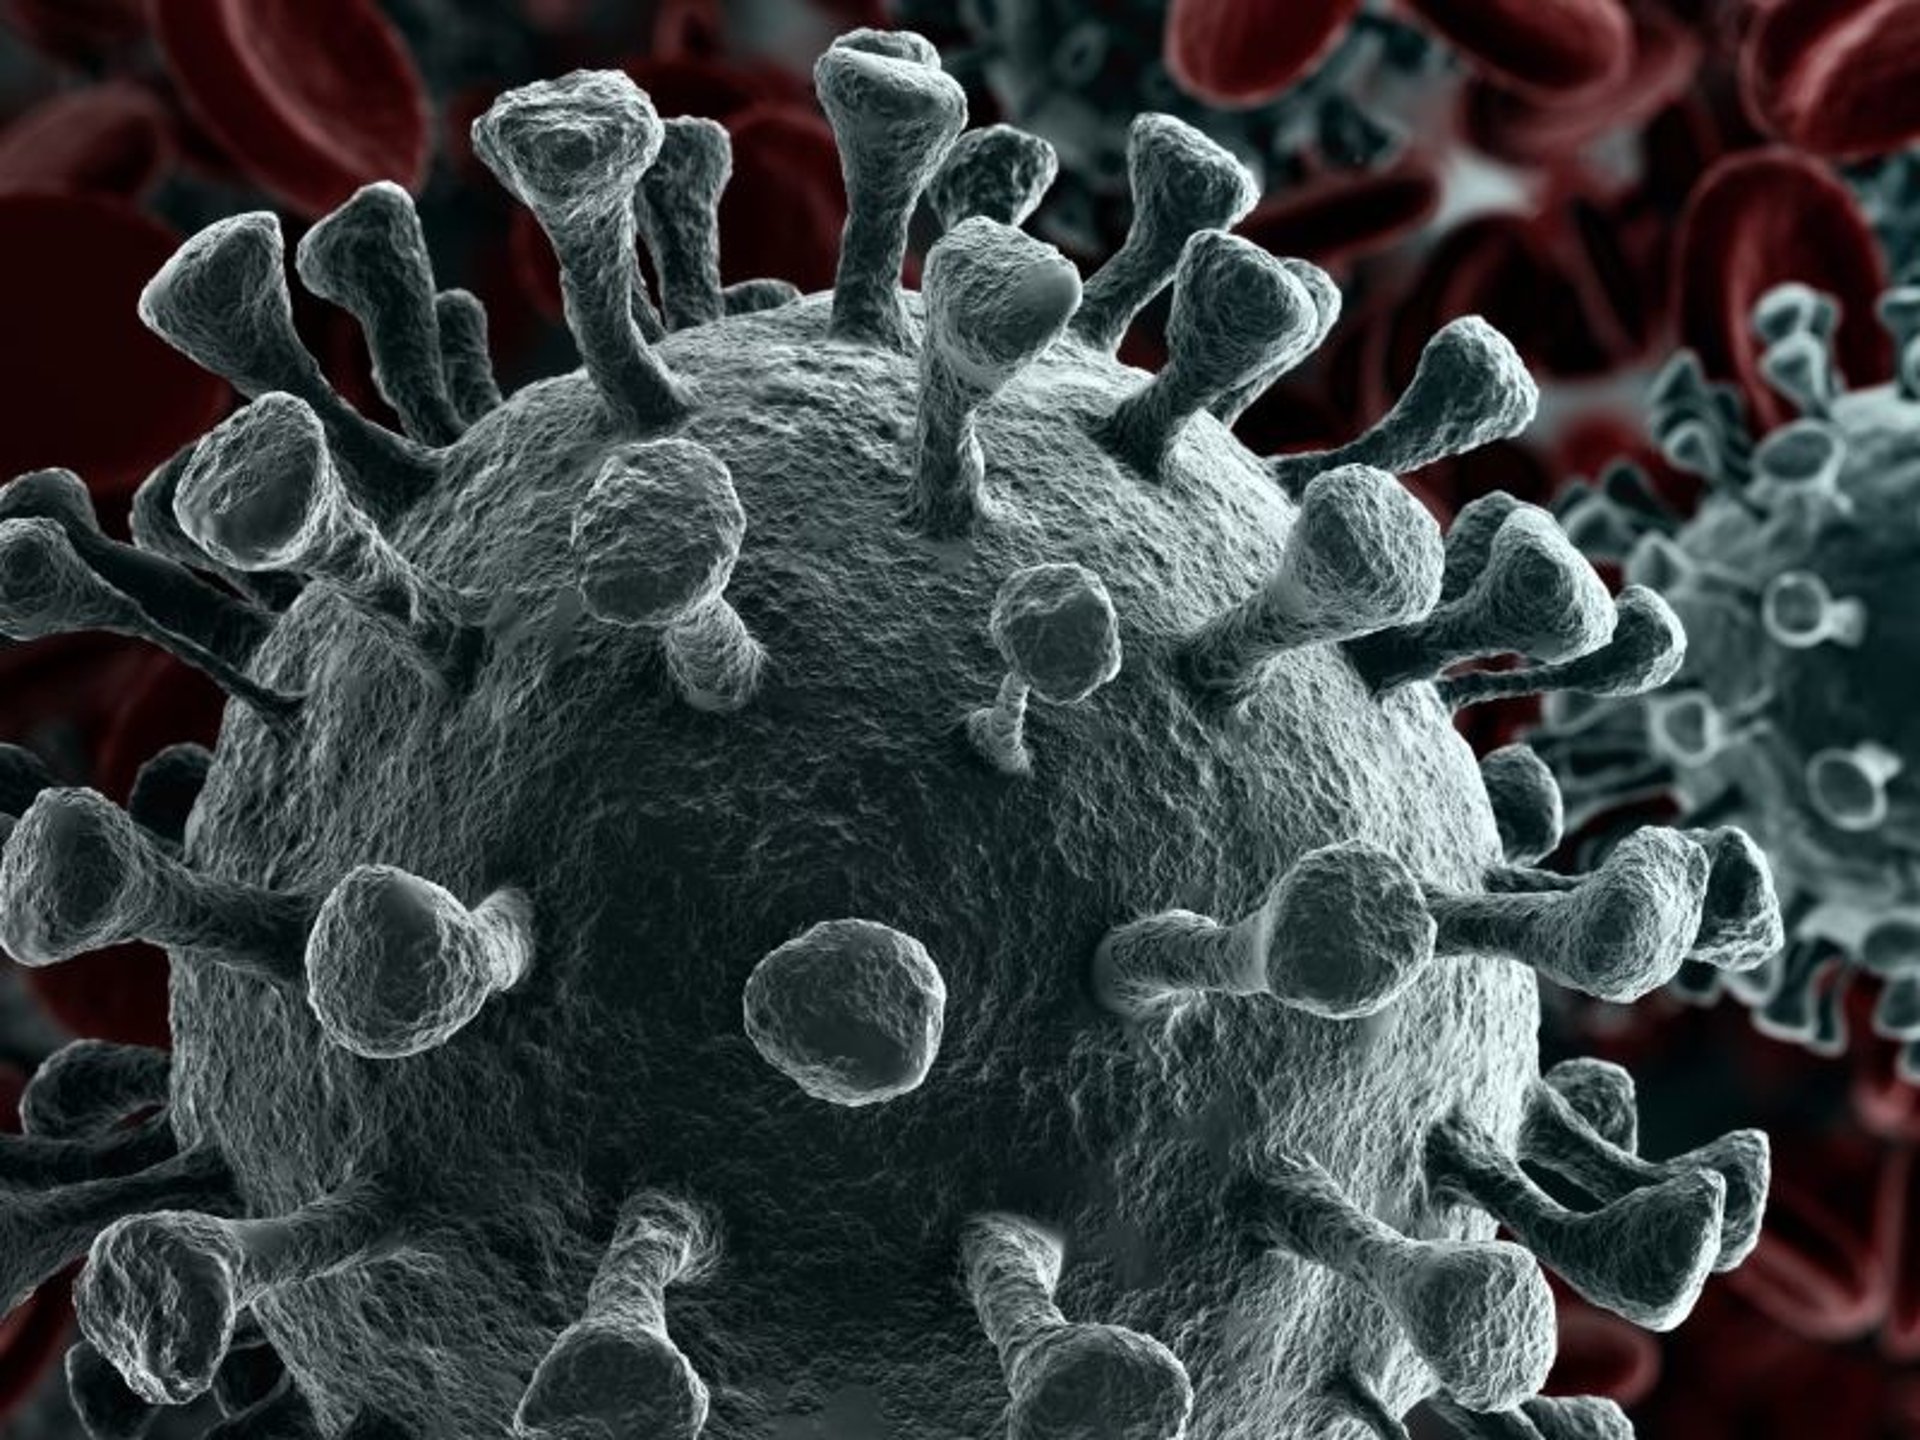 News Picture: More Data Suggests New Coronavirus Variants Weaken Vaccines, Treatments